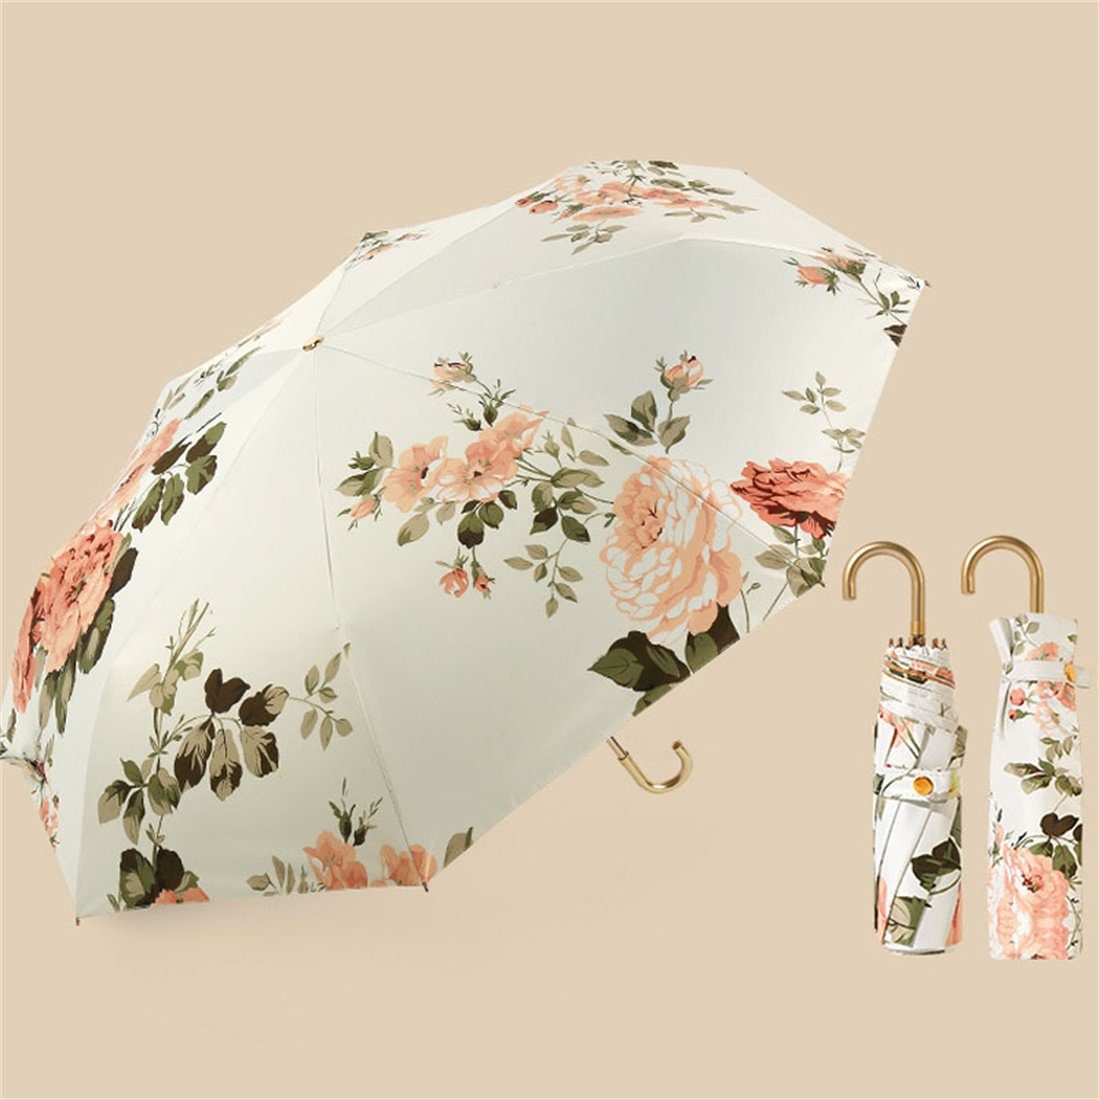 DÖRÖY Taschenregenschirm UV-Faltschirm,Tragbarer Regenschirm,Goldener Haken- Regenschirm